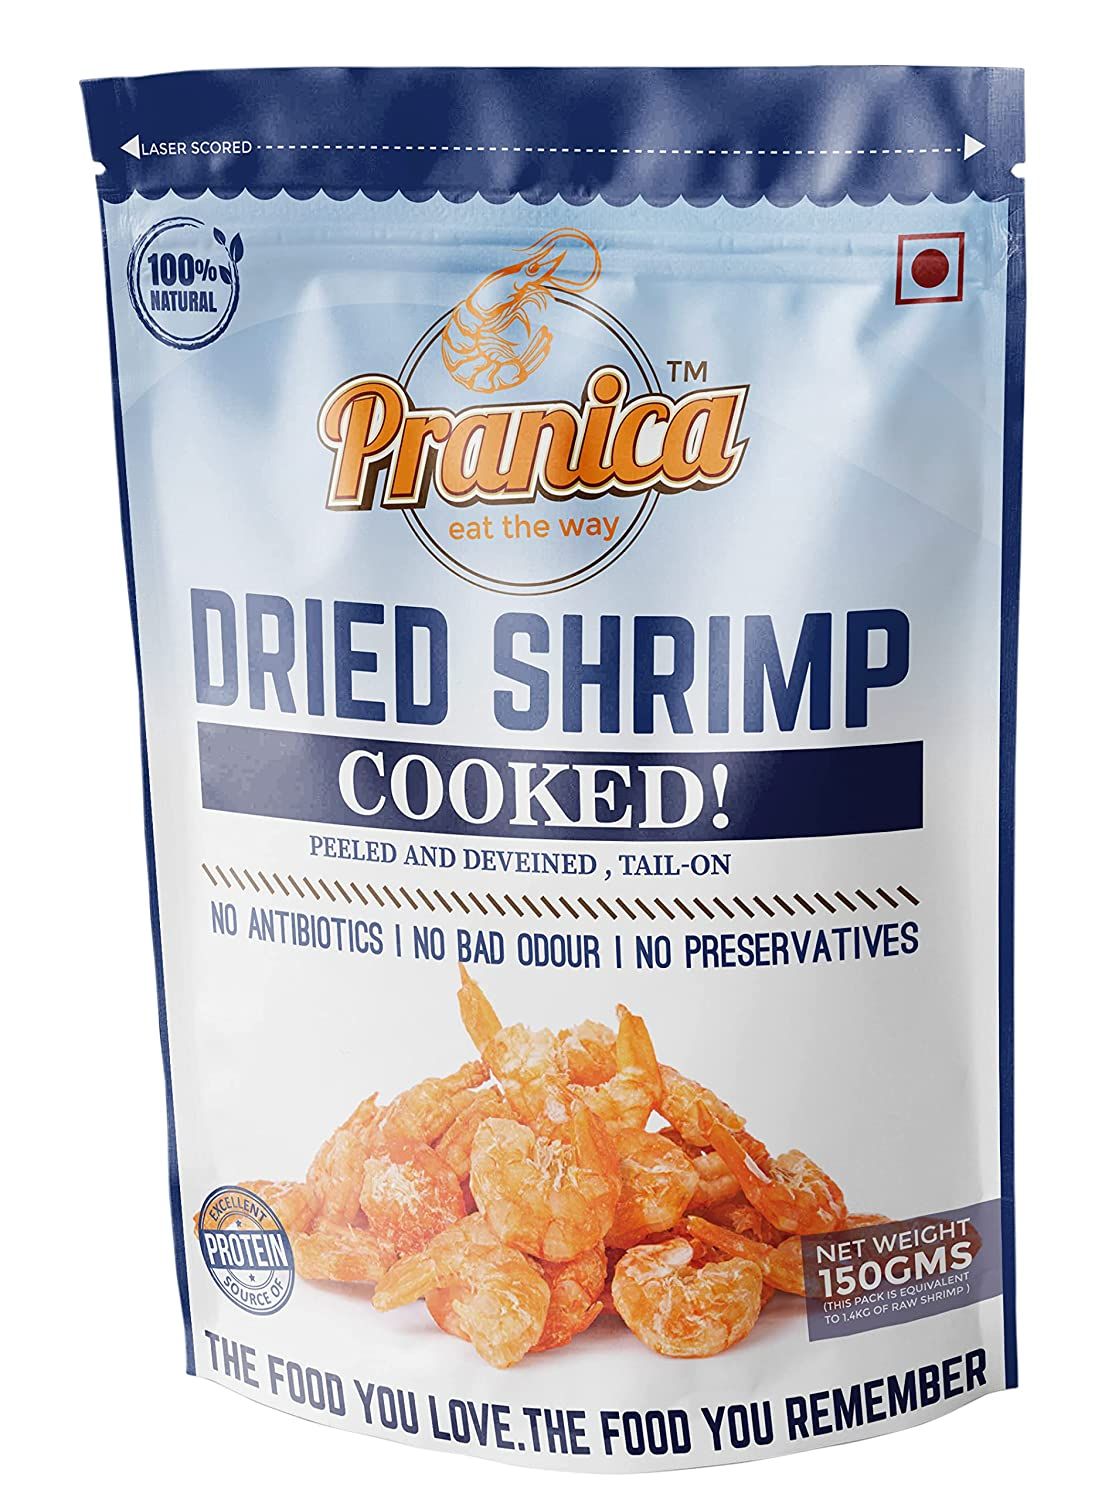 Pranica Dried Shrimp Seafood Image